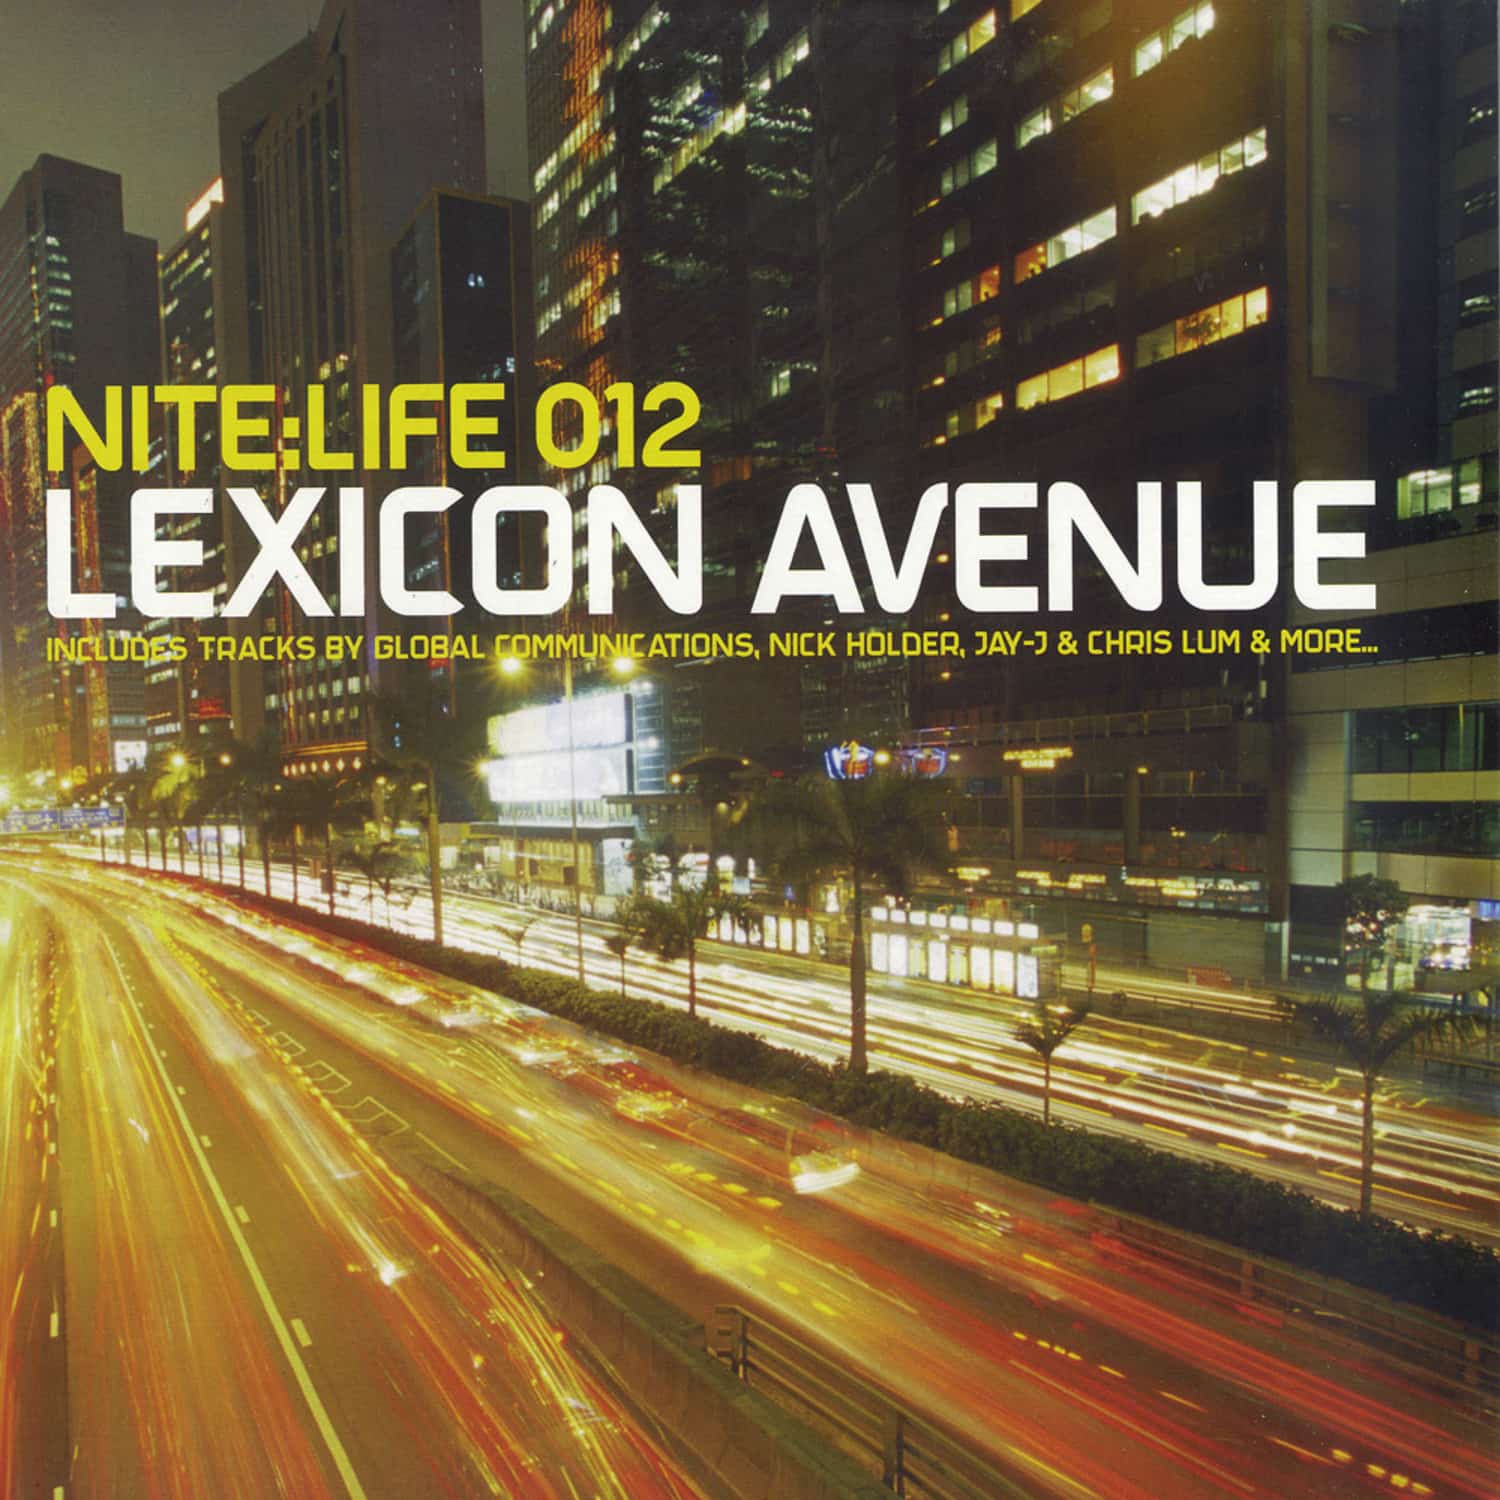 Lexican Avenue - NITE:LIFE 012 